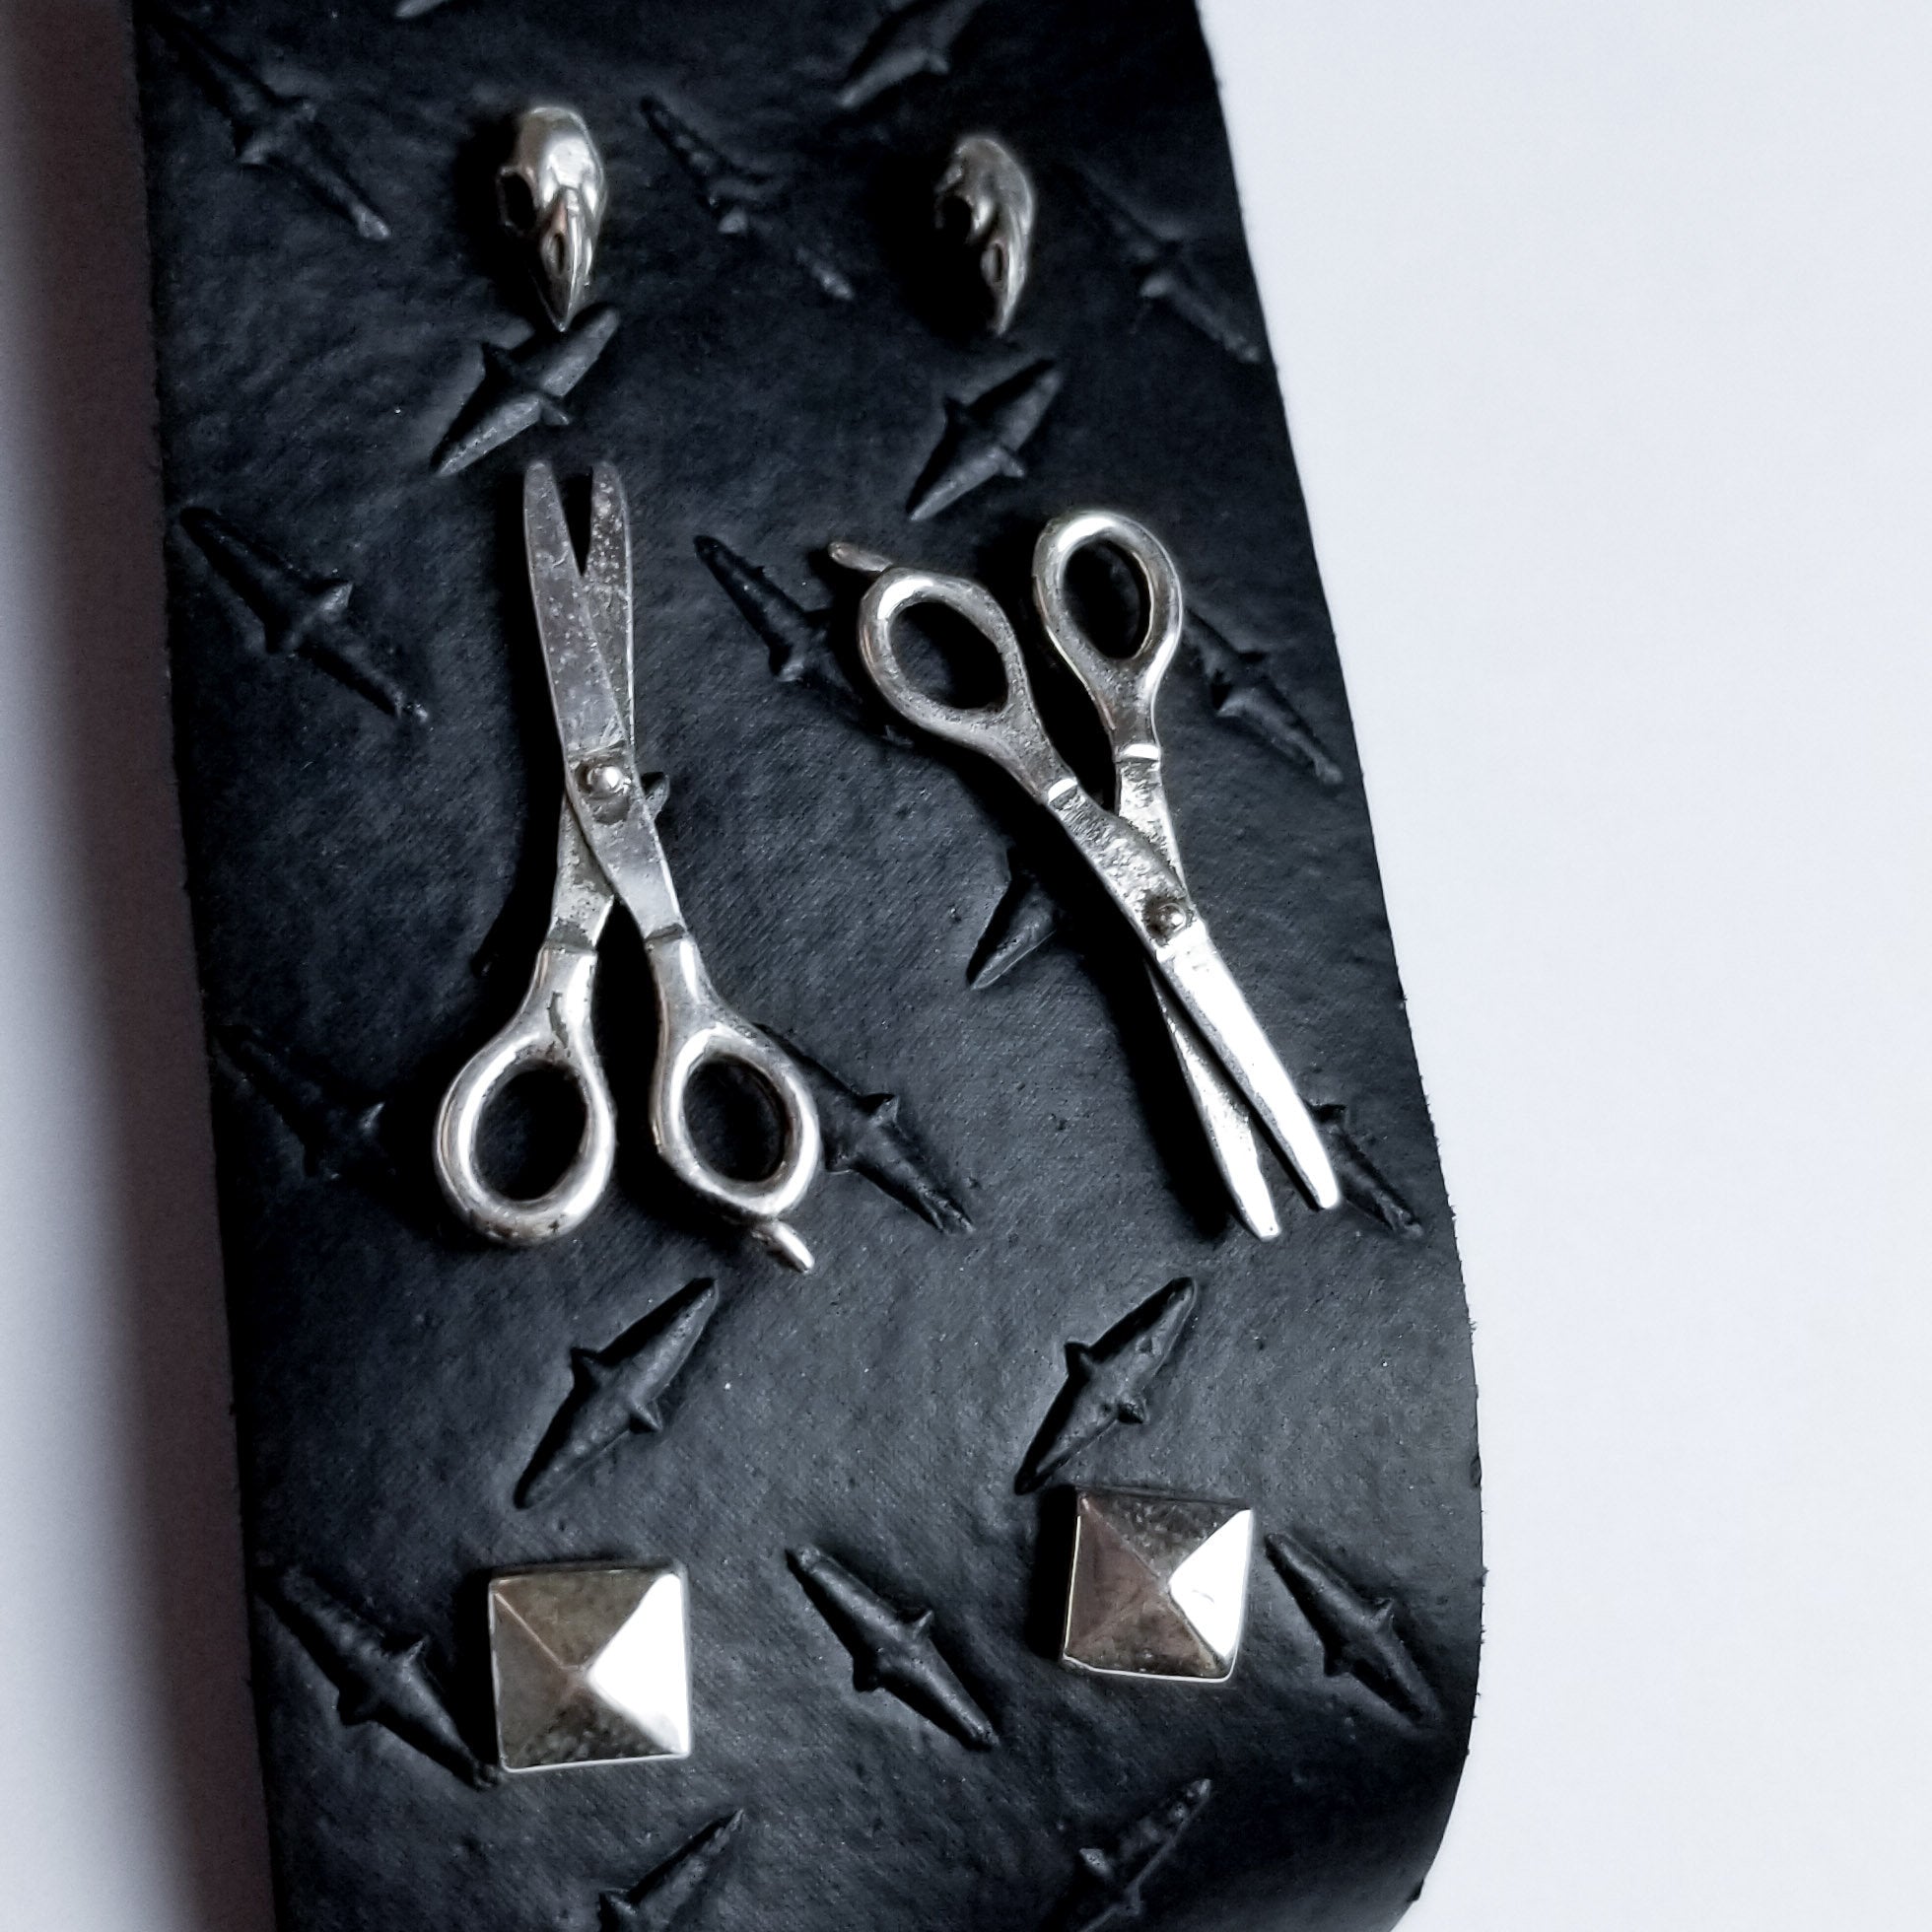 Set of 3 Pairs of Earrings #3 - Bird Skull, Scissors & Pyramid Studs - Inchoo Bijoux